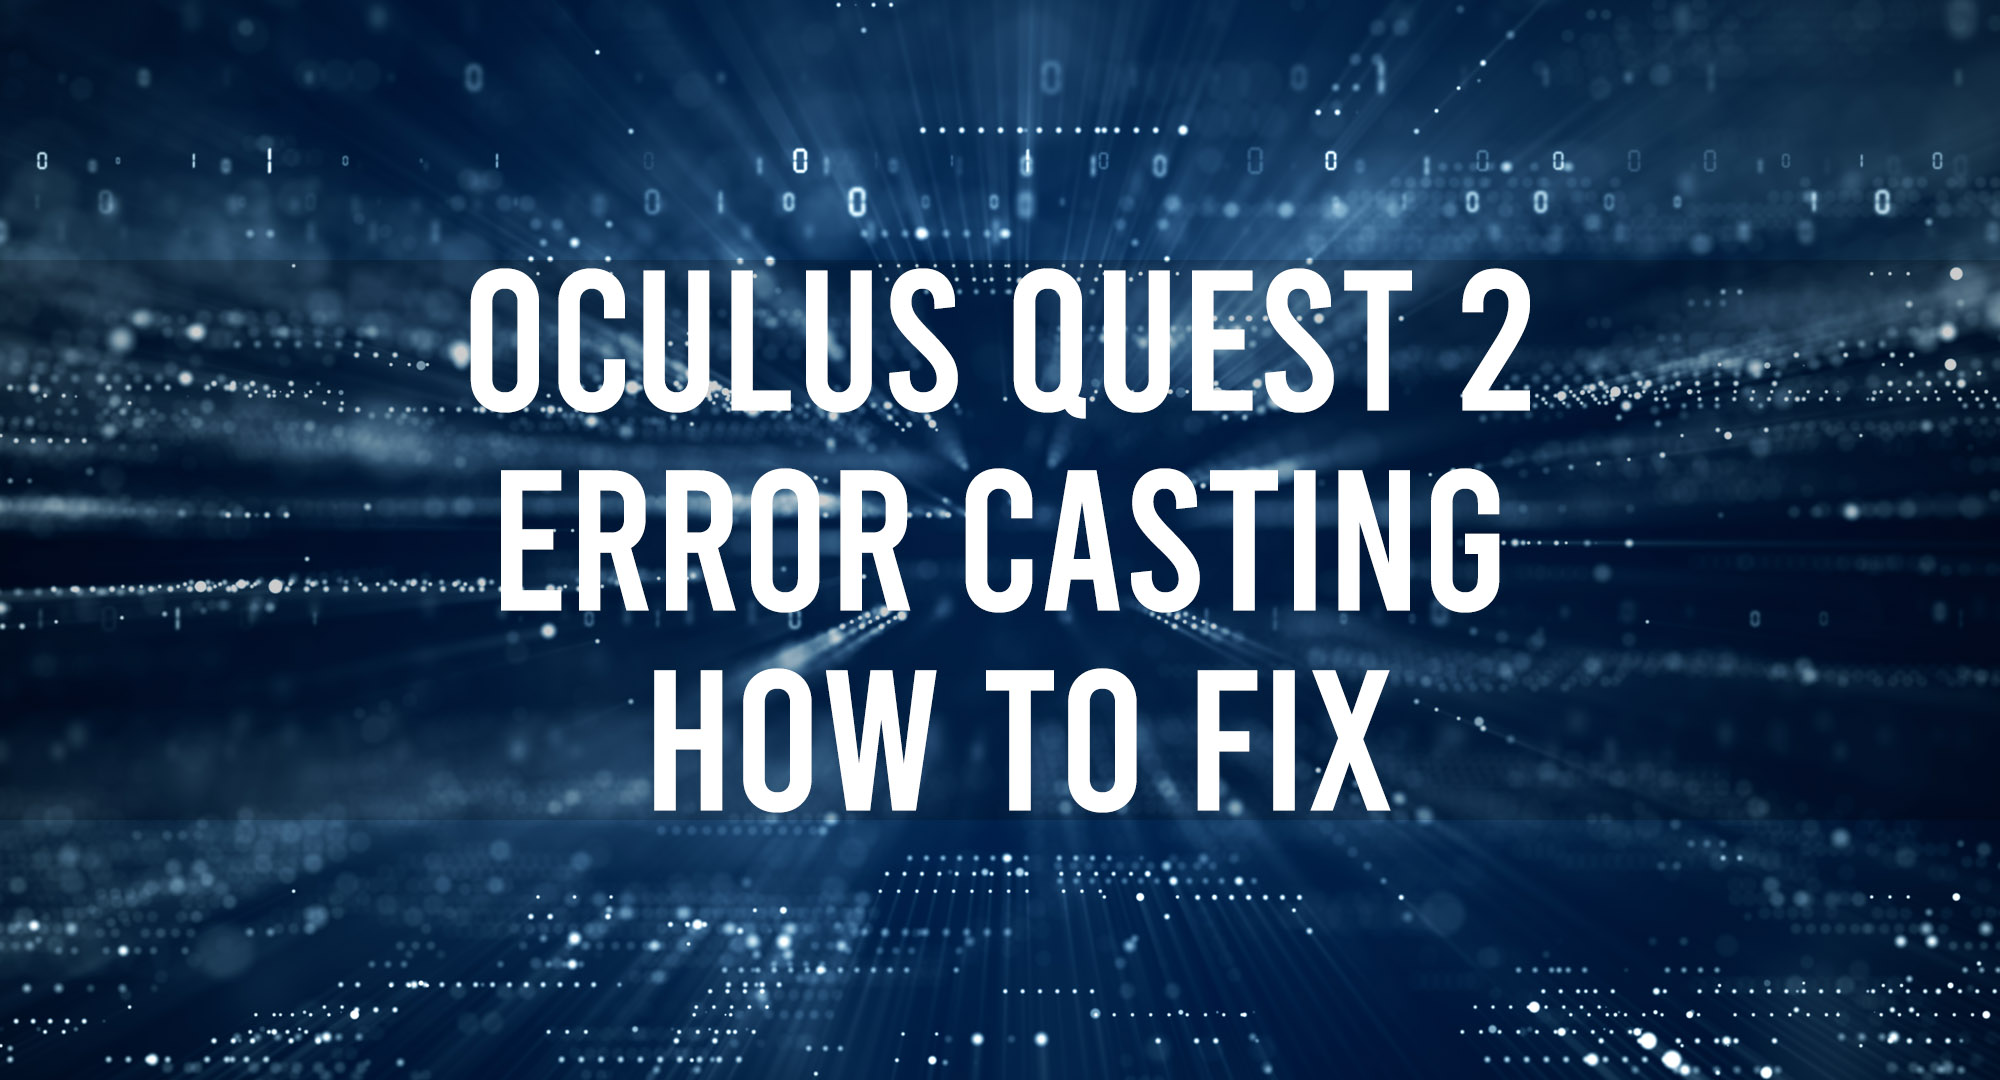 Oculus Quest 2 Error Casting - How To Fix